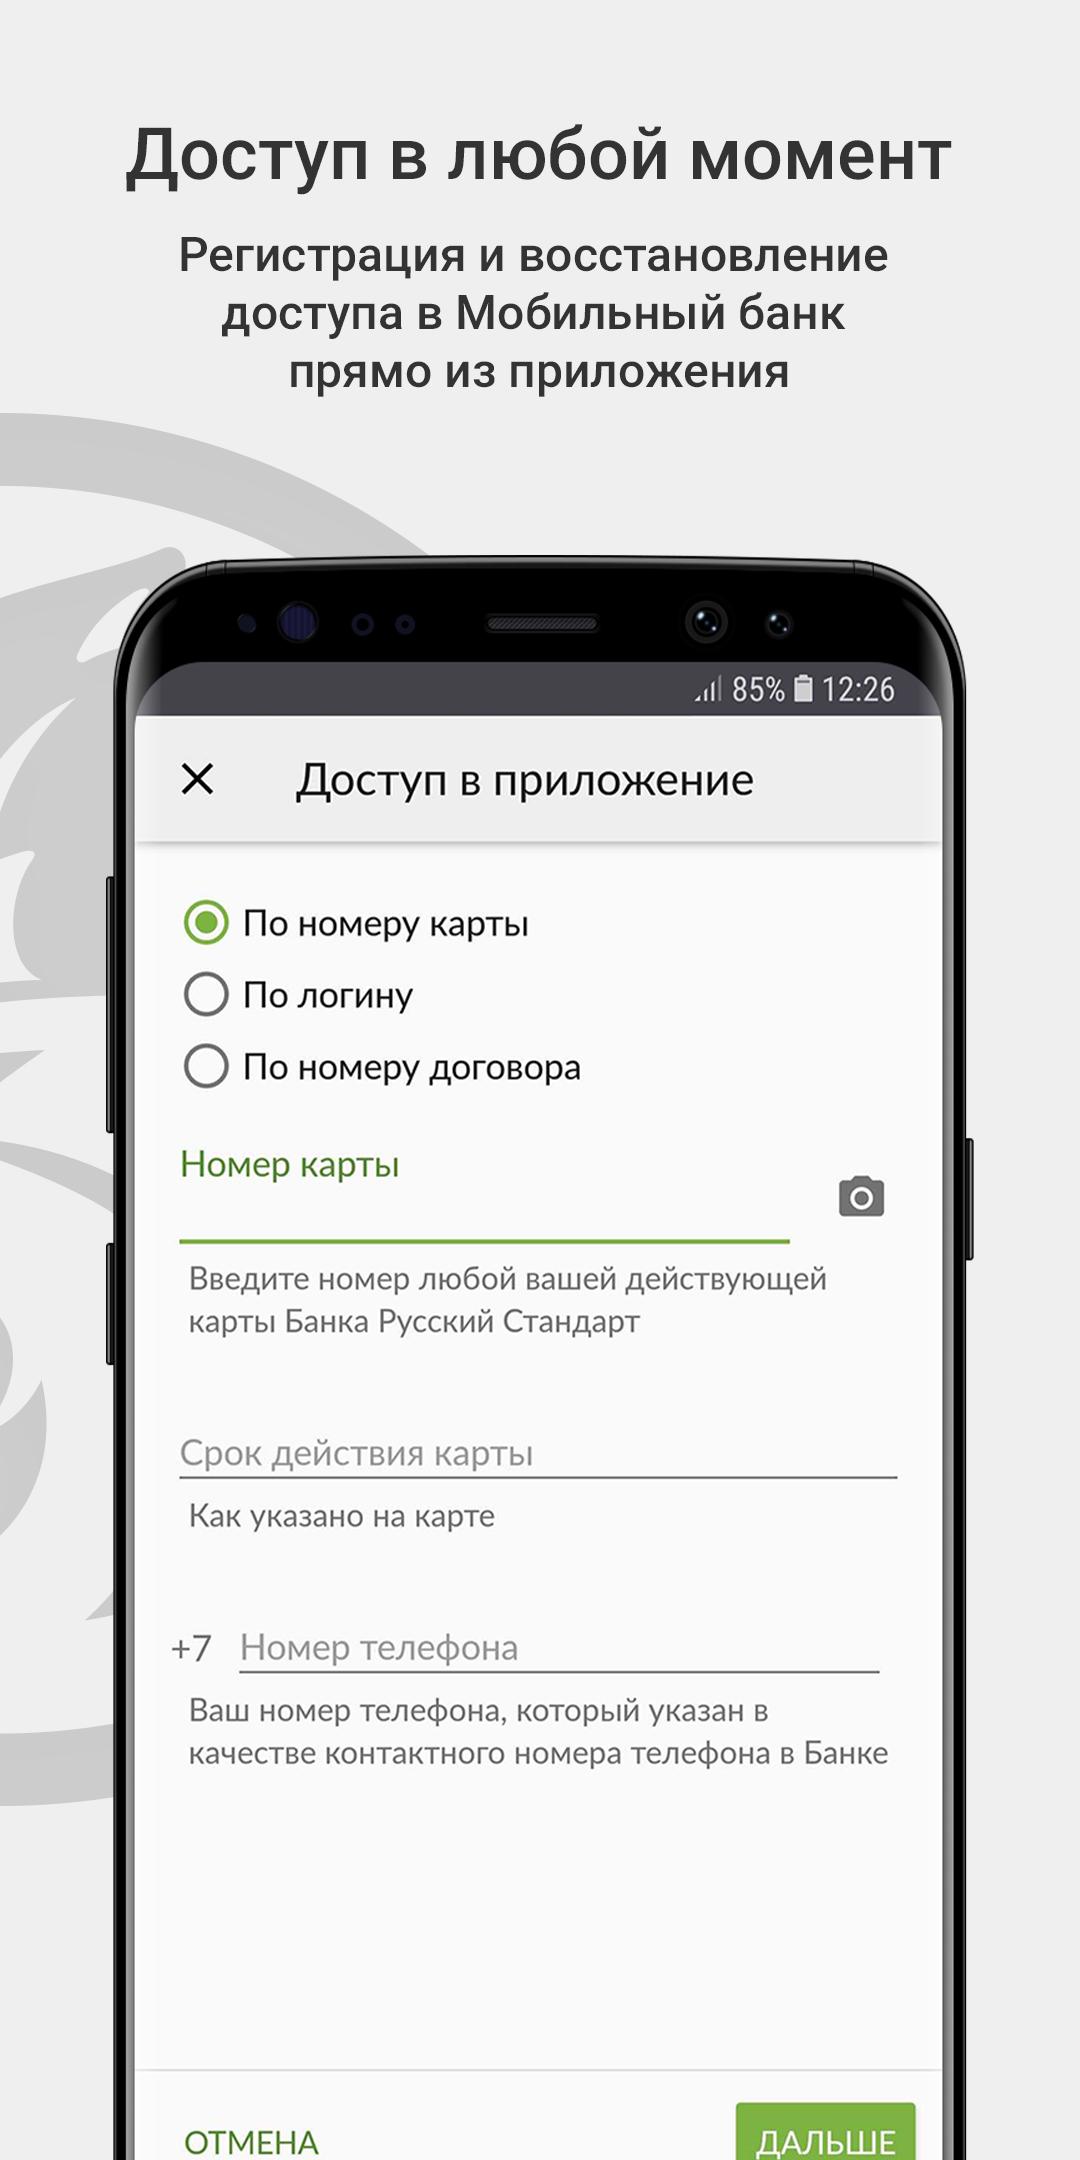 Android application Моб. банк Русский Стандарт screenshort